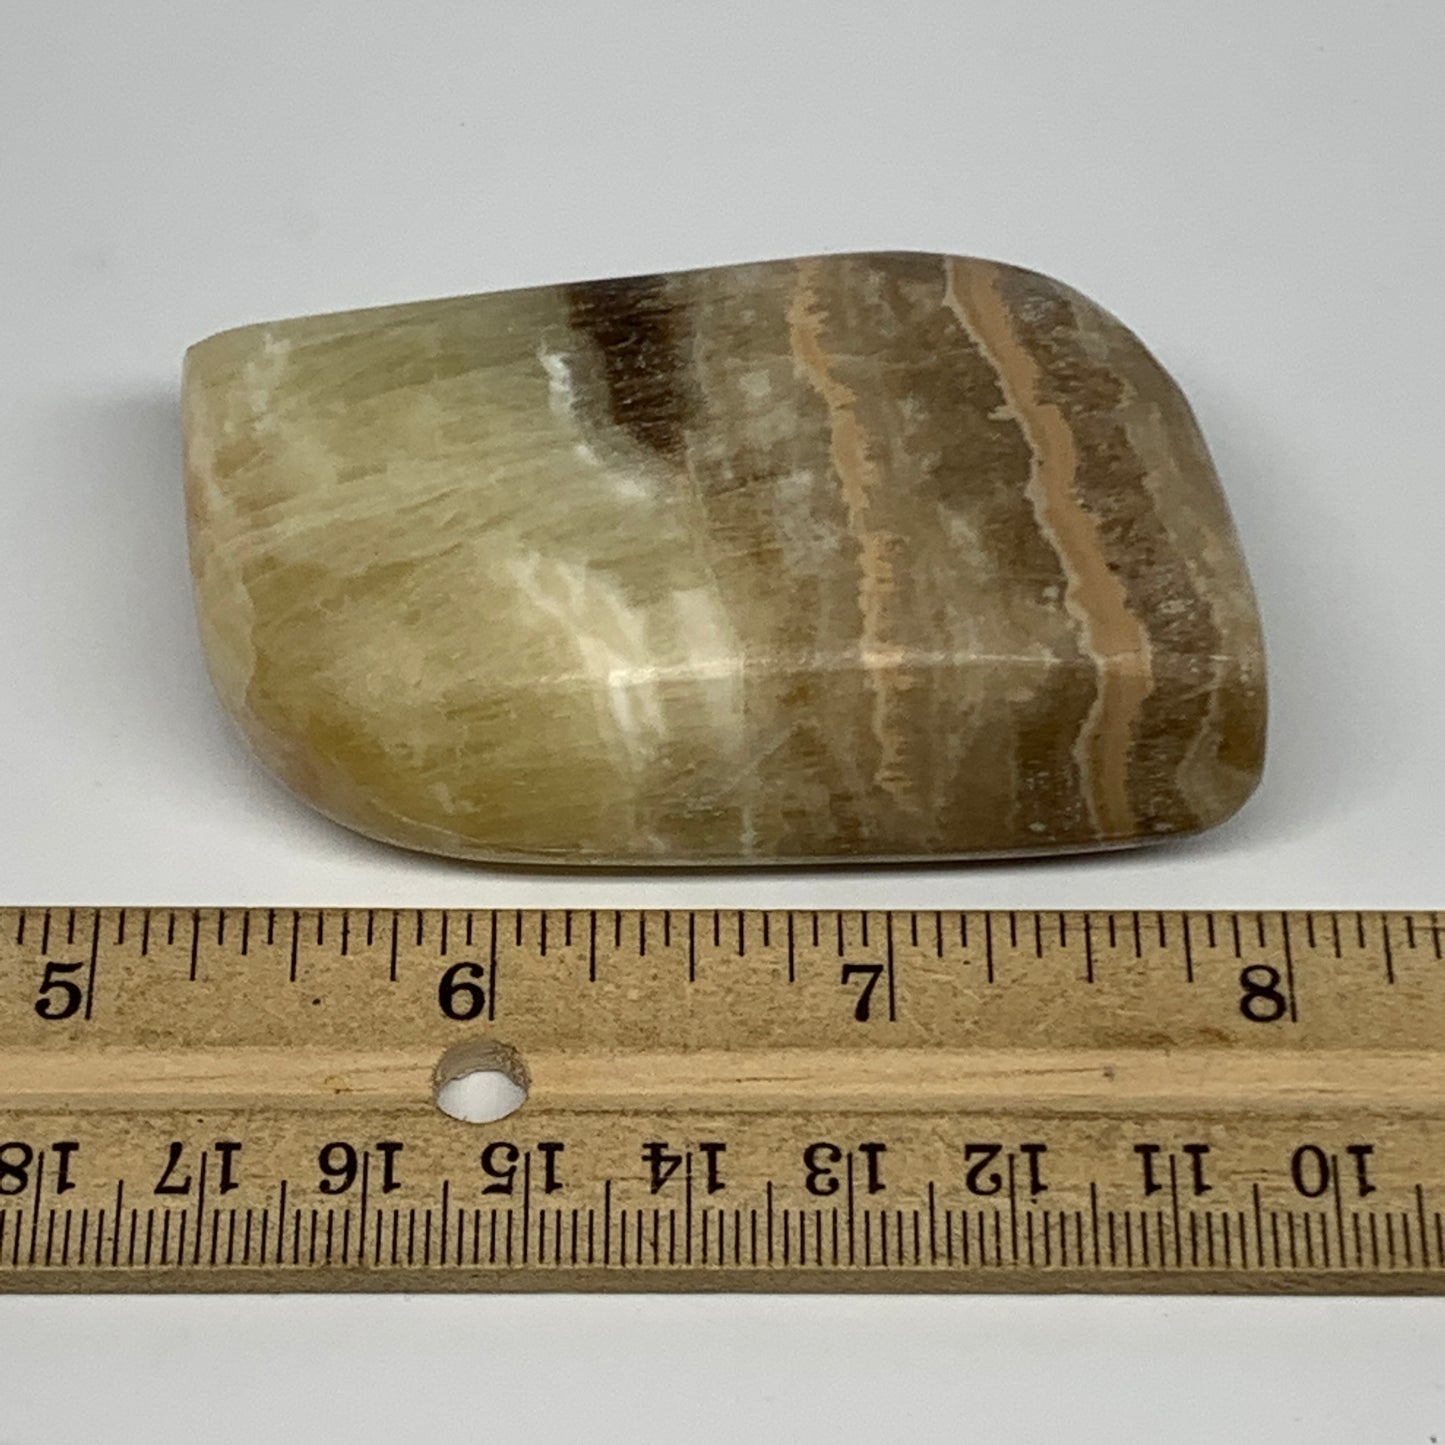 143.3g, 2.6"x1.6"x1", Natural Calcite Palm-Stone Reiki @Afghanistan, B14910